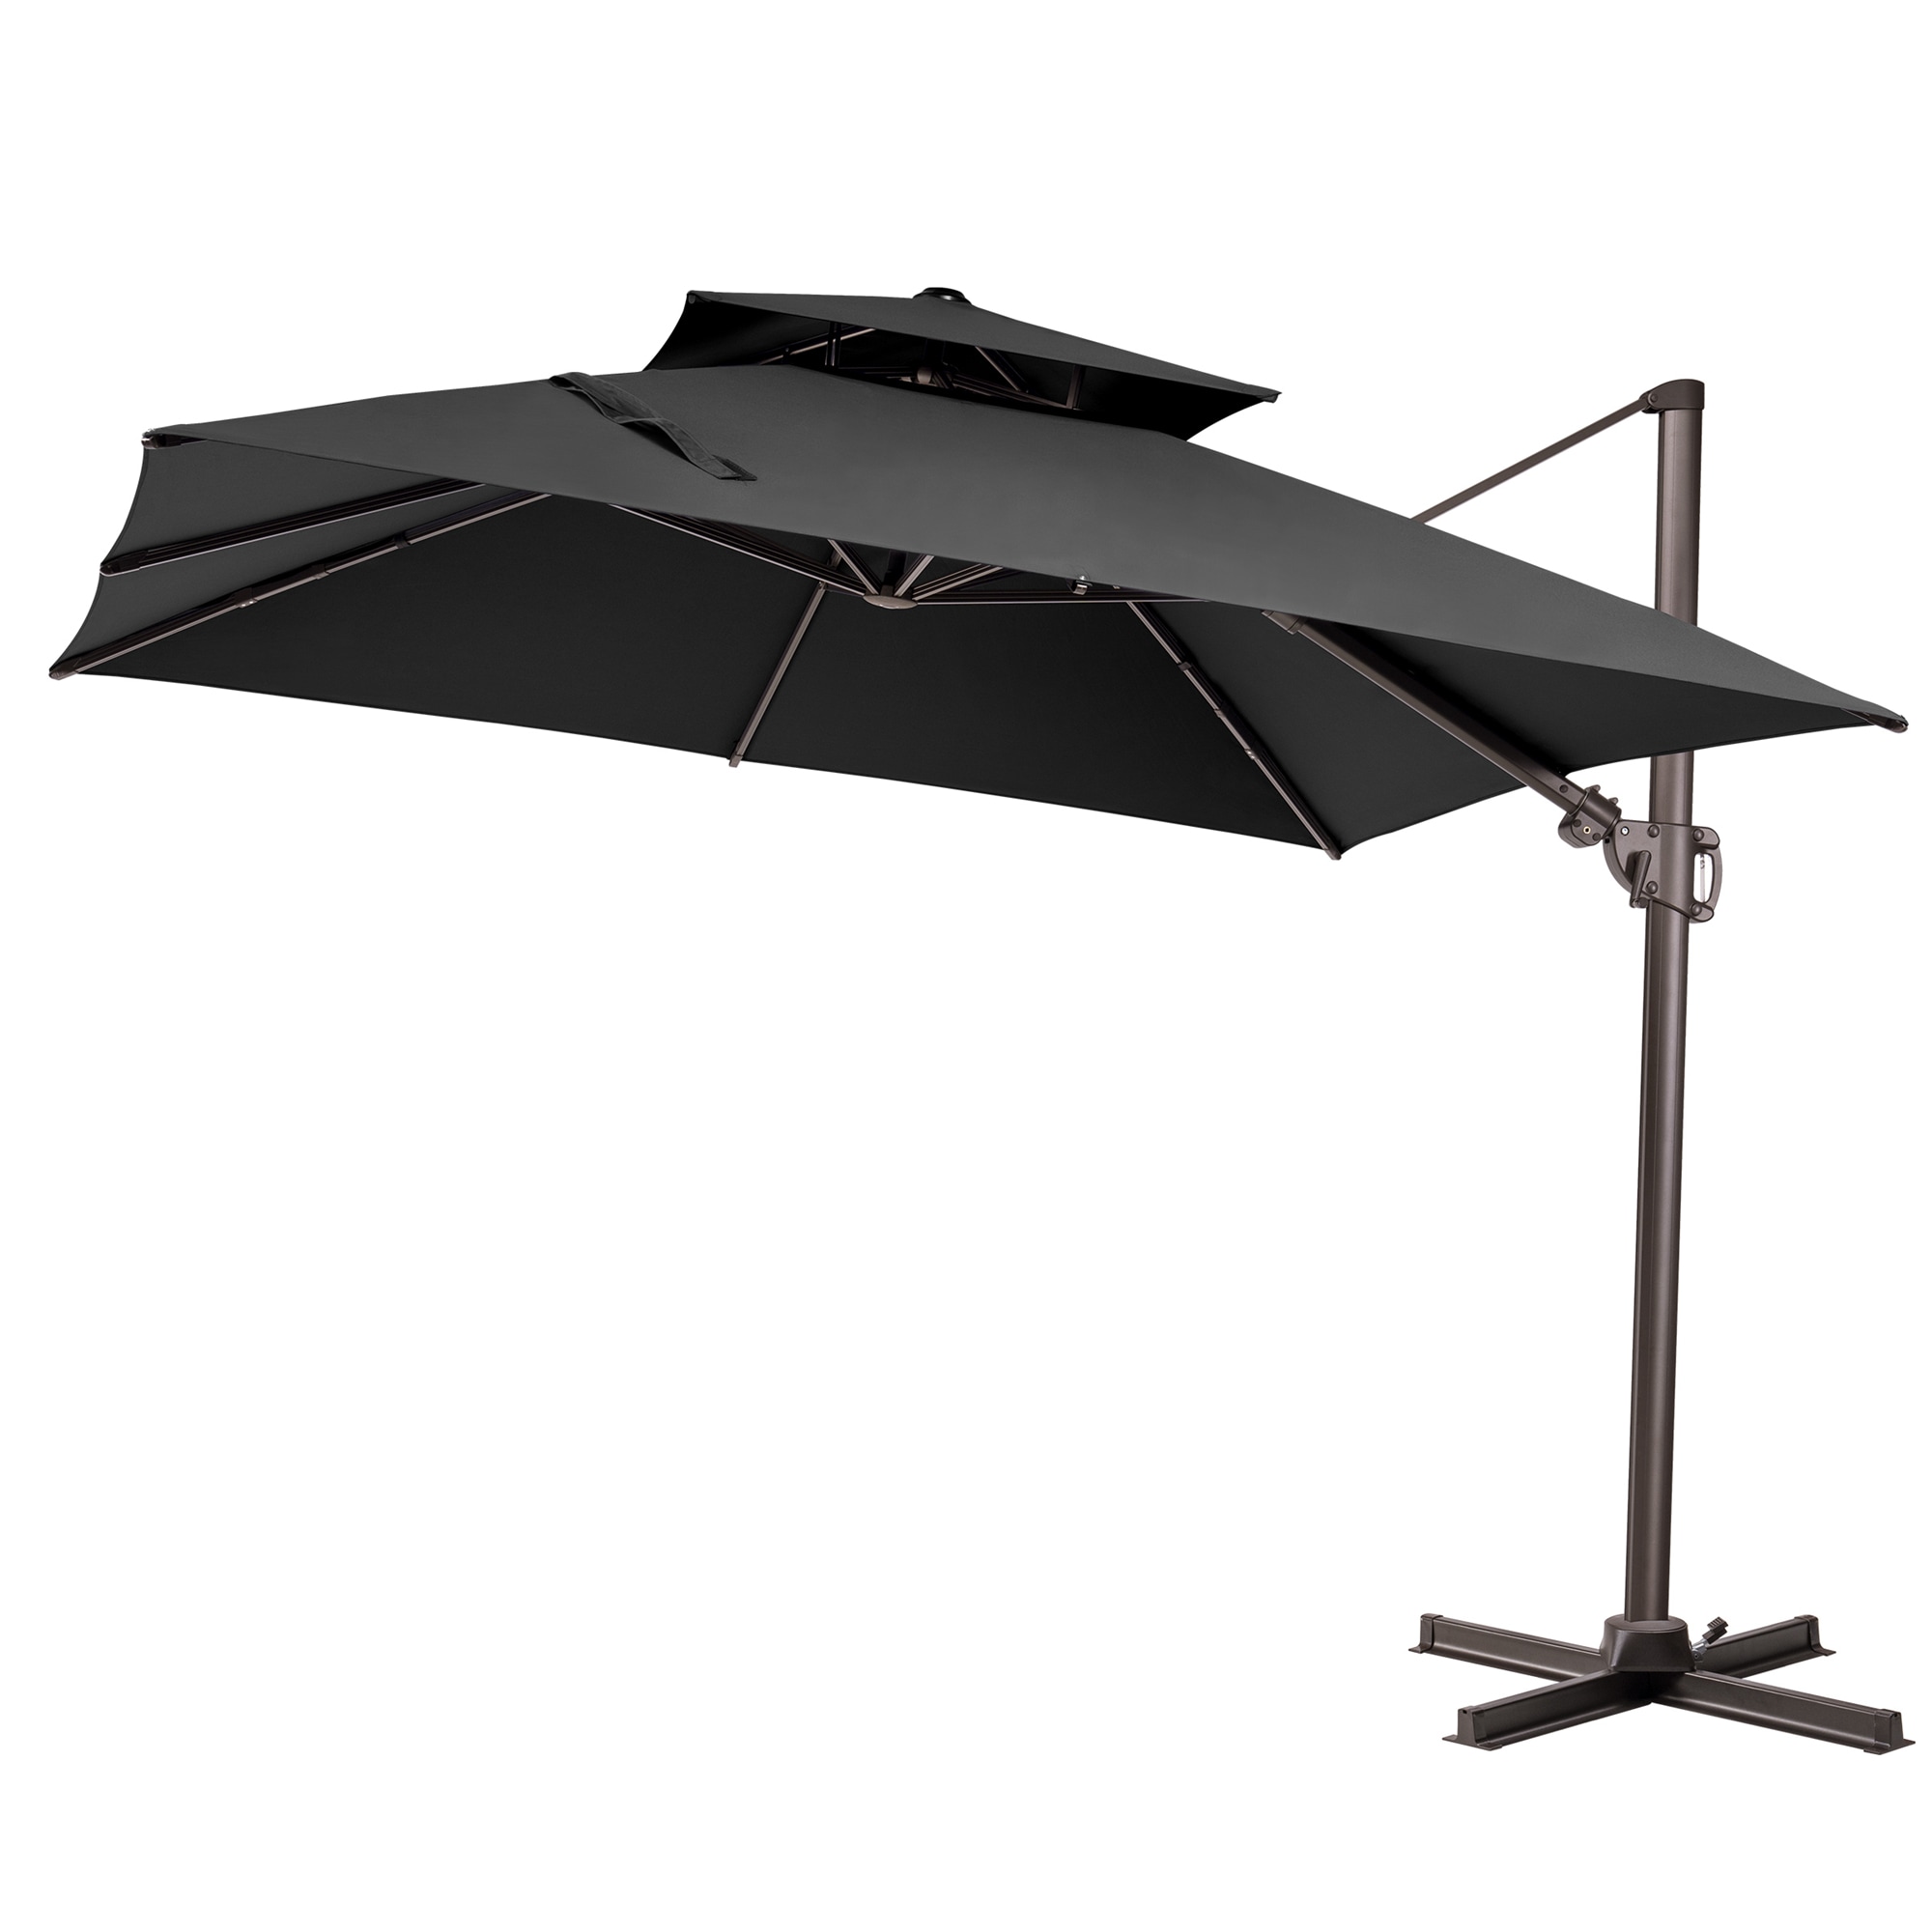 is er Golven krom Crestlive Products 10-ft Dark Gray Slide-tilt Cantilever Patio Umbrella in  the Patio Umbrellas department at Lowes.com